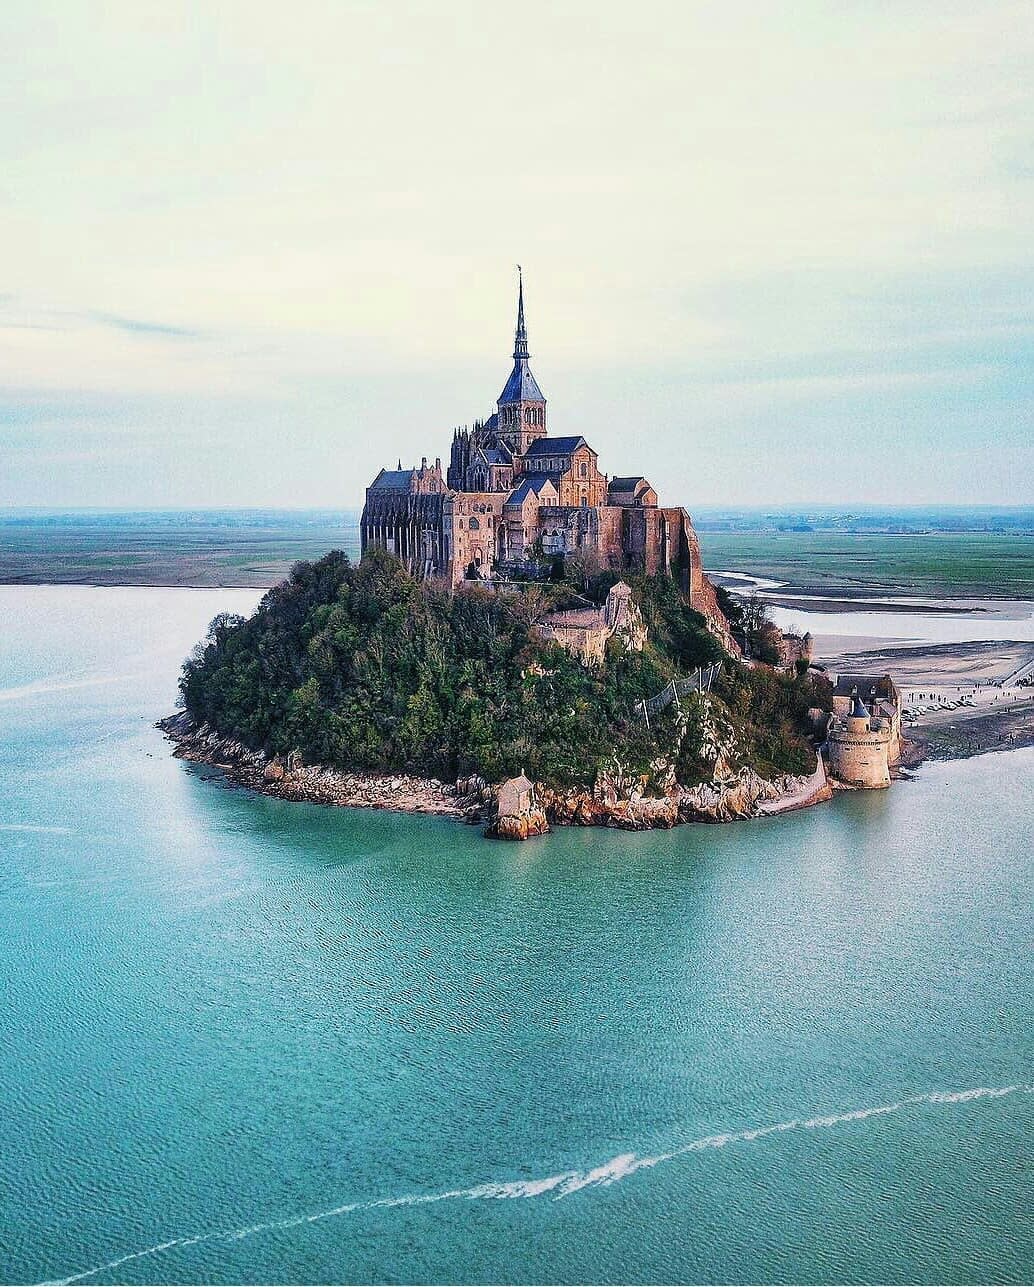 Mont Saint-Michel (castle-island) in France